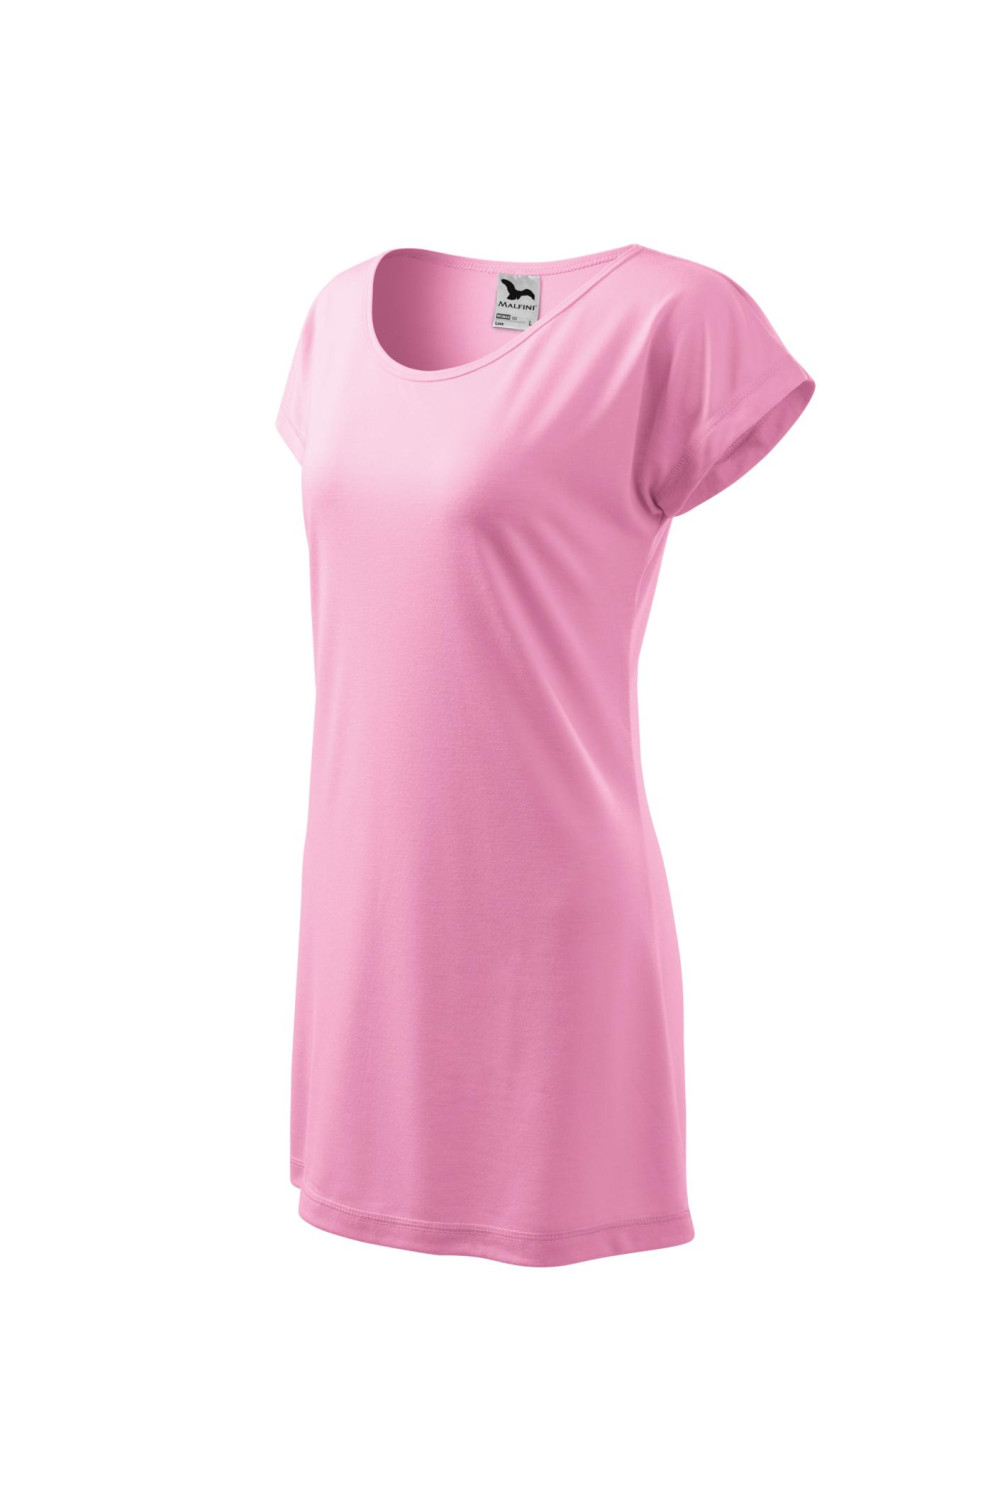 Koszulka/sukienka 123 LOVE koszulki / T-shirt /  różowy